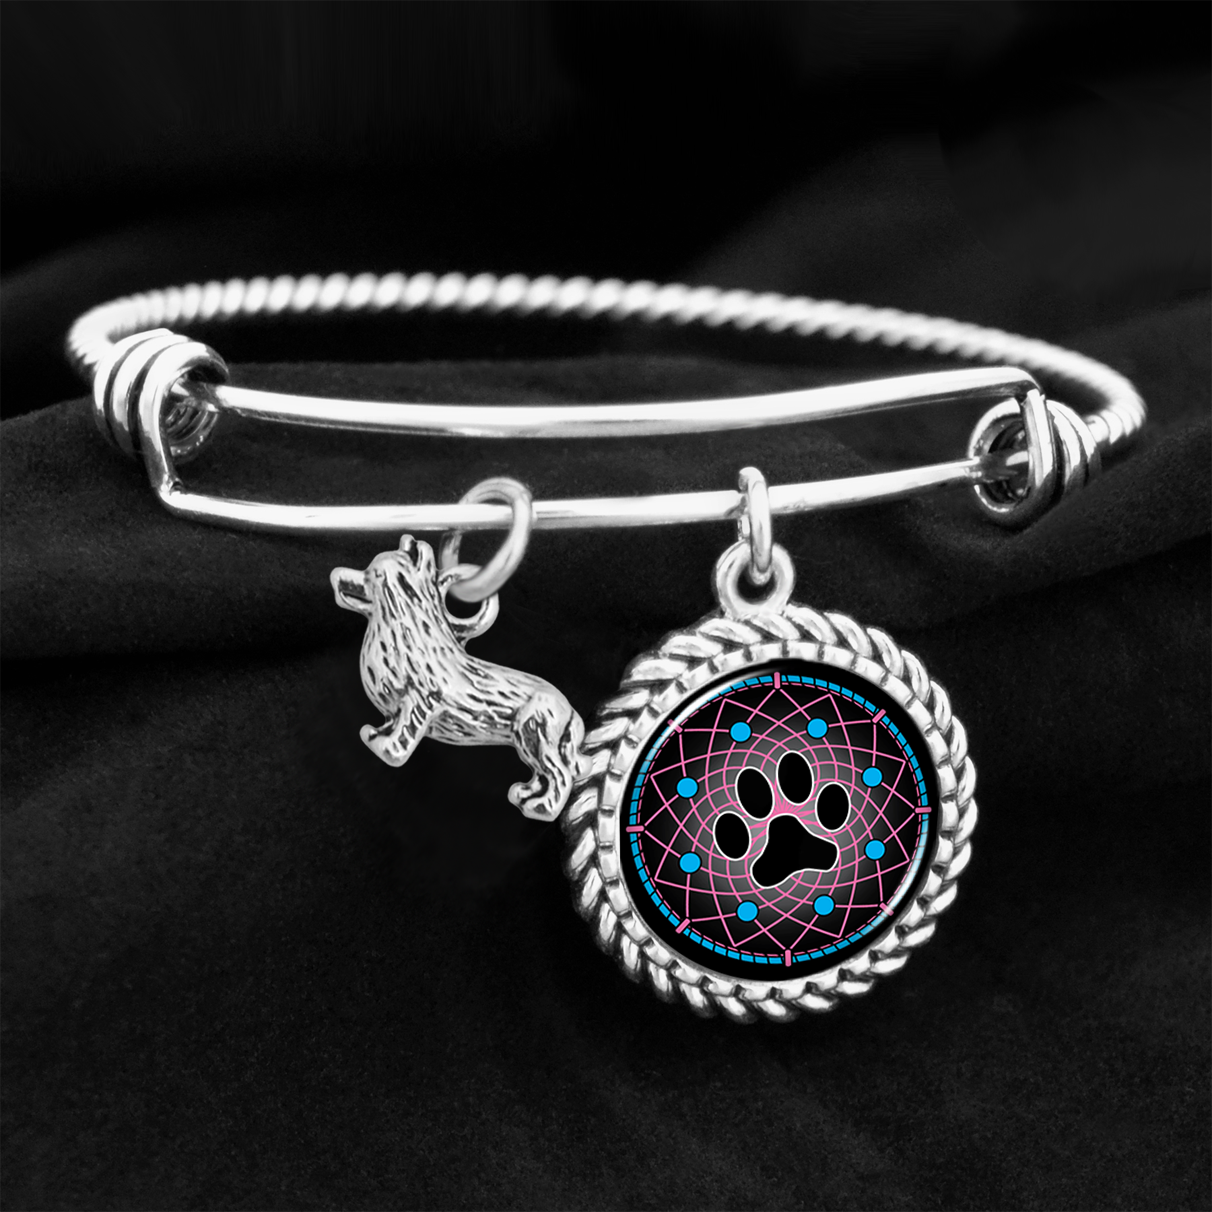 Corgi Dreamcatcher Charm Bracelet